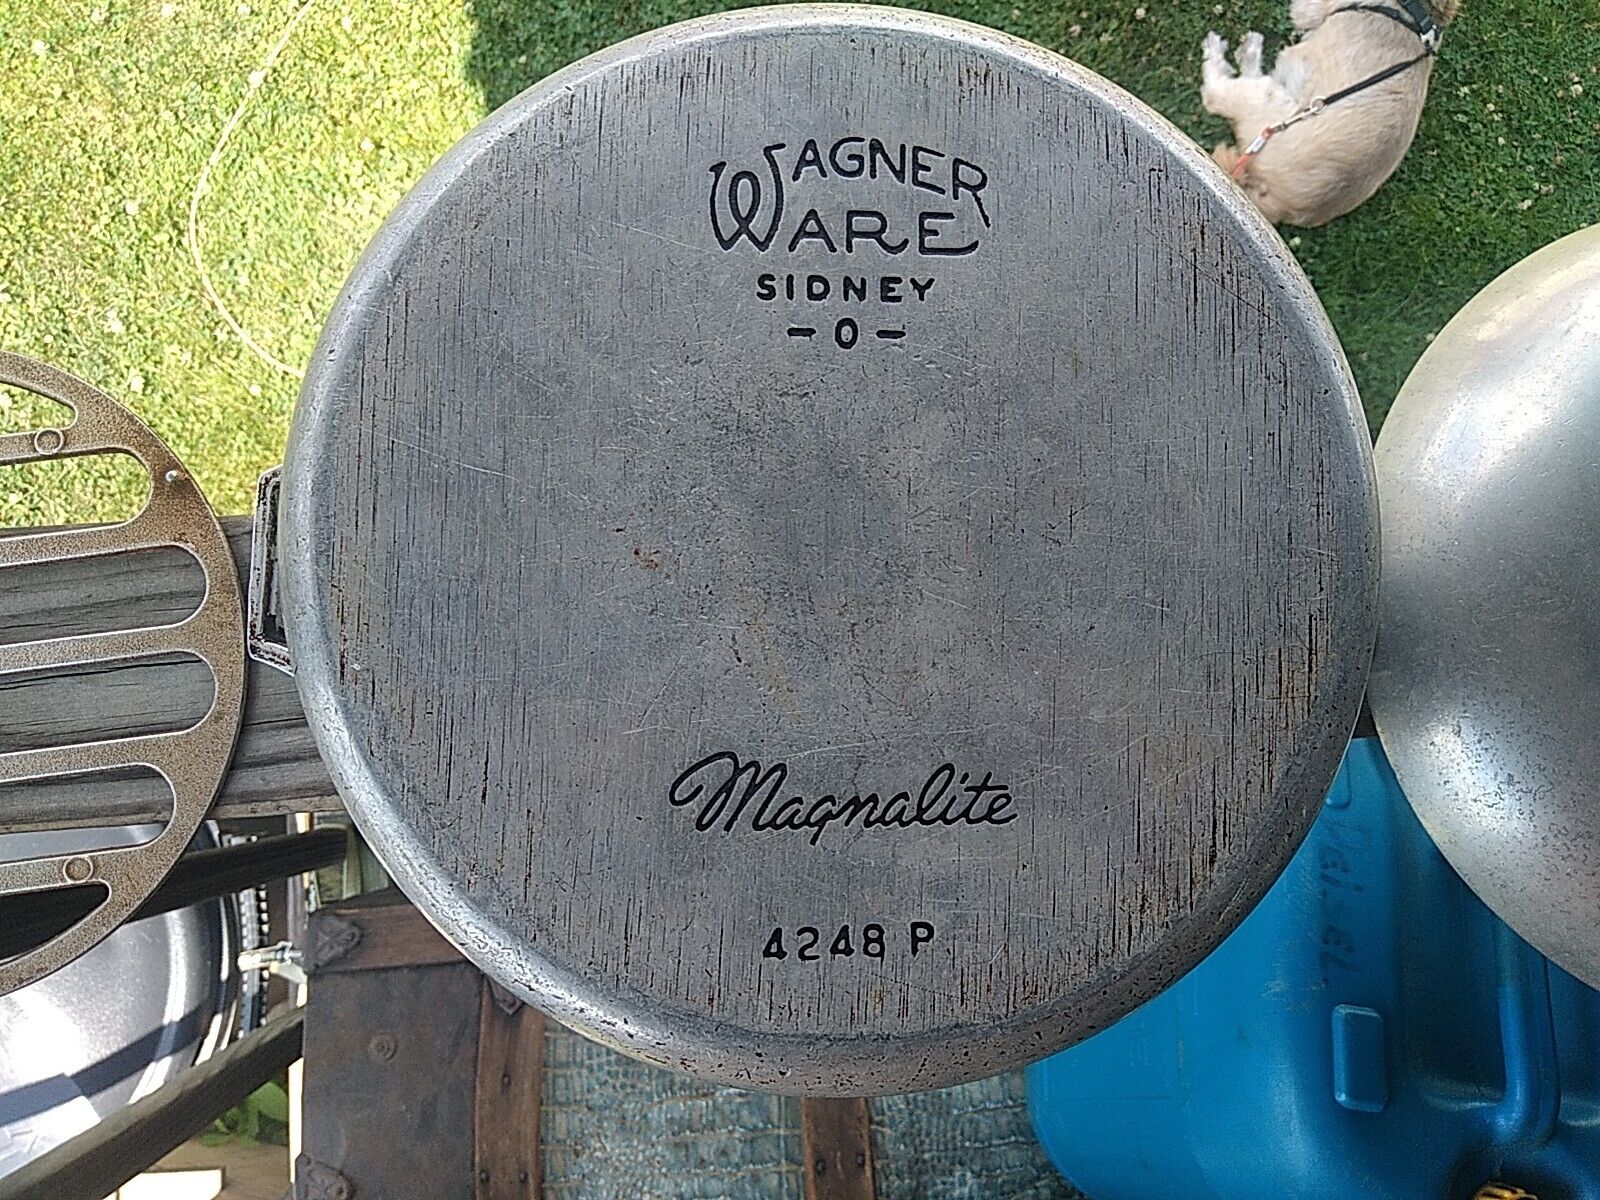 Wagner Ware Sidney Magnalite Roasterette 4248 - P